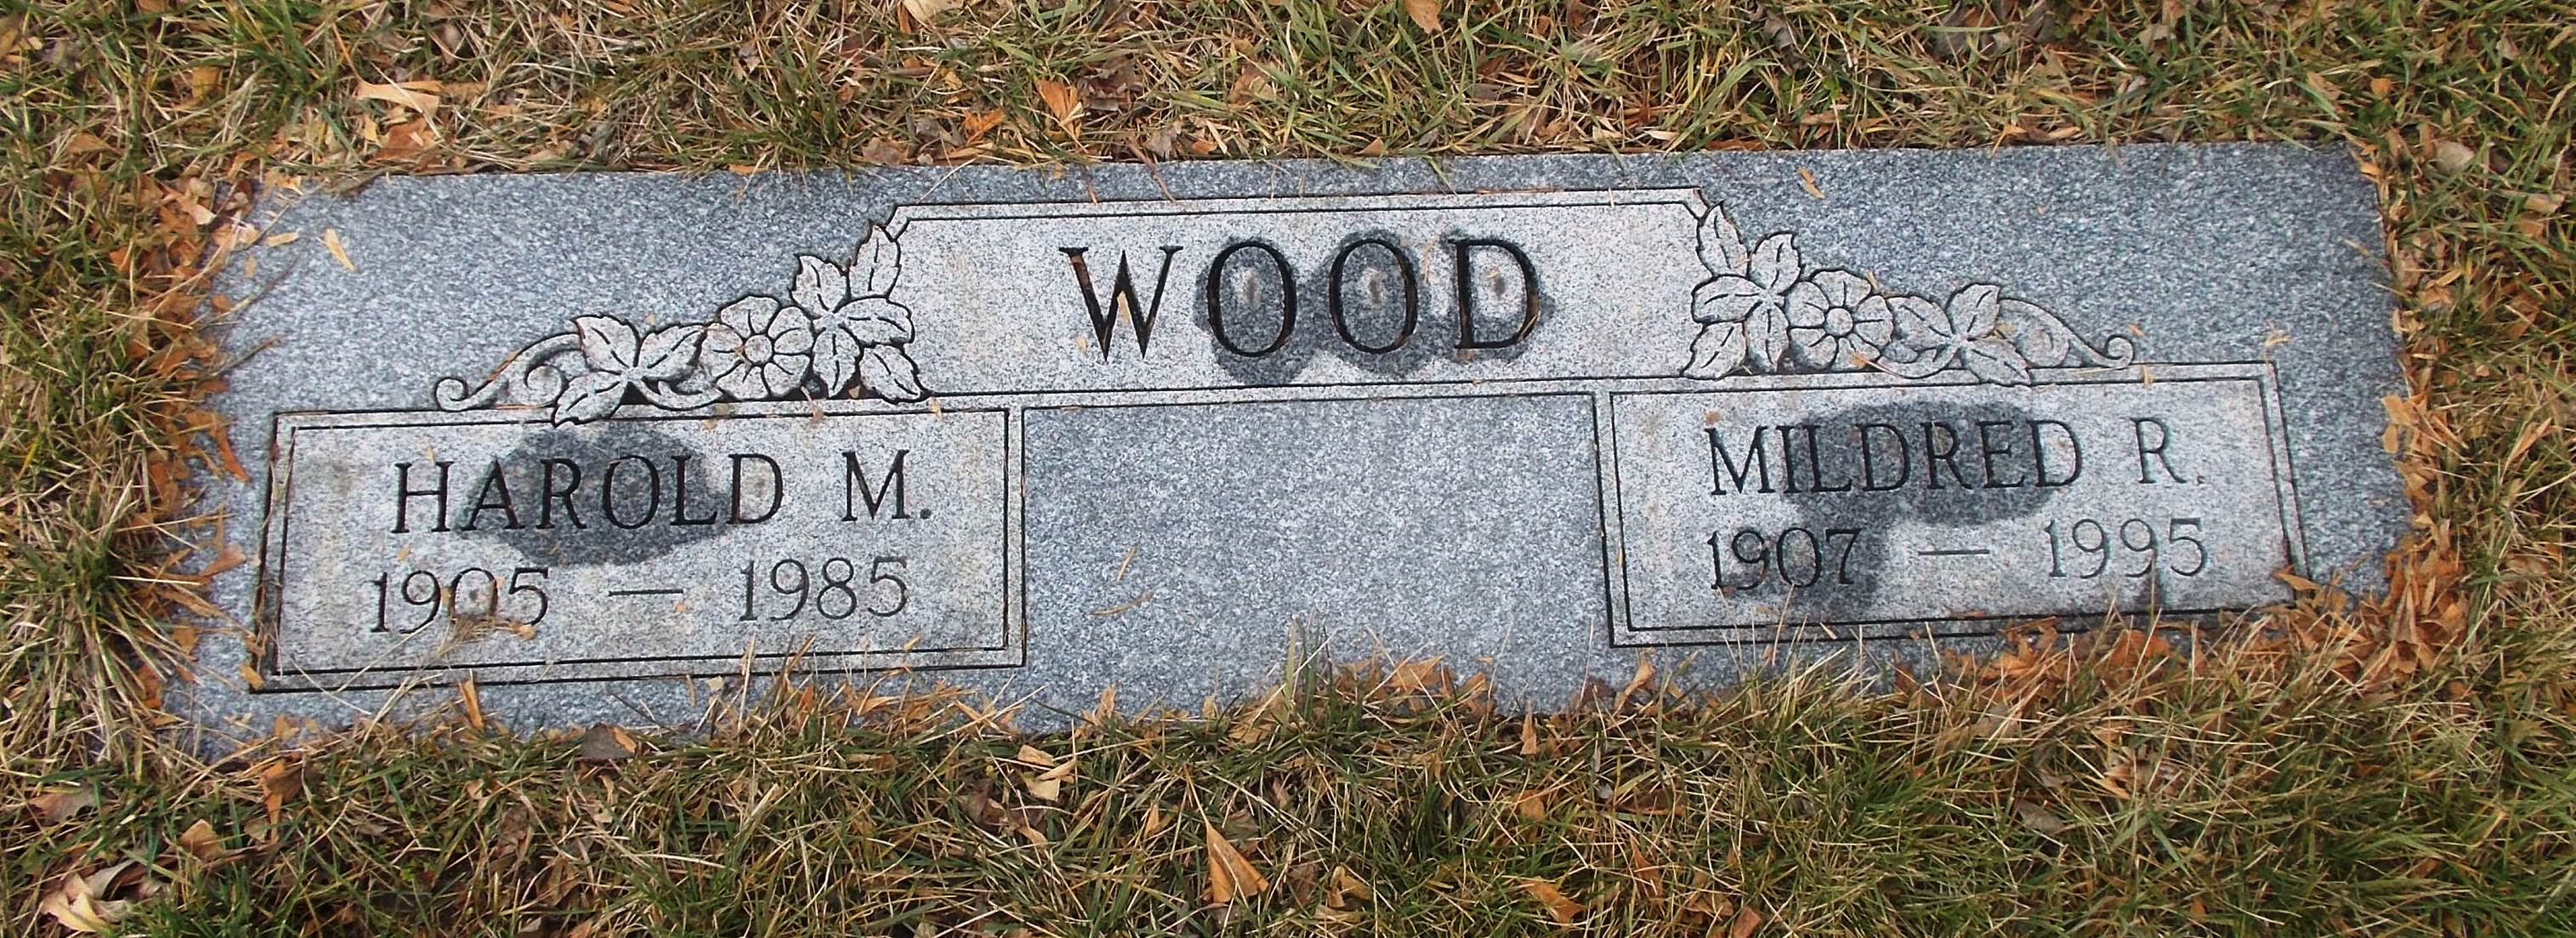 Mildred R Wood